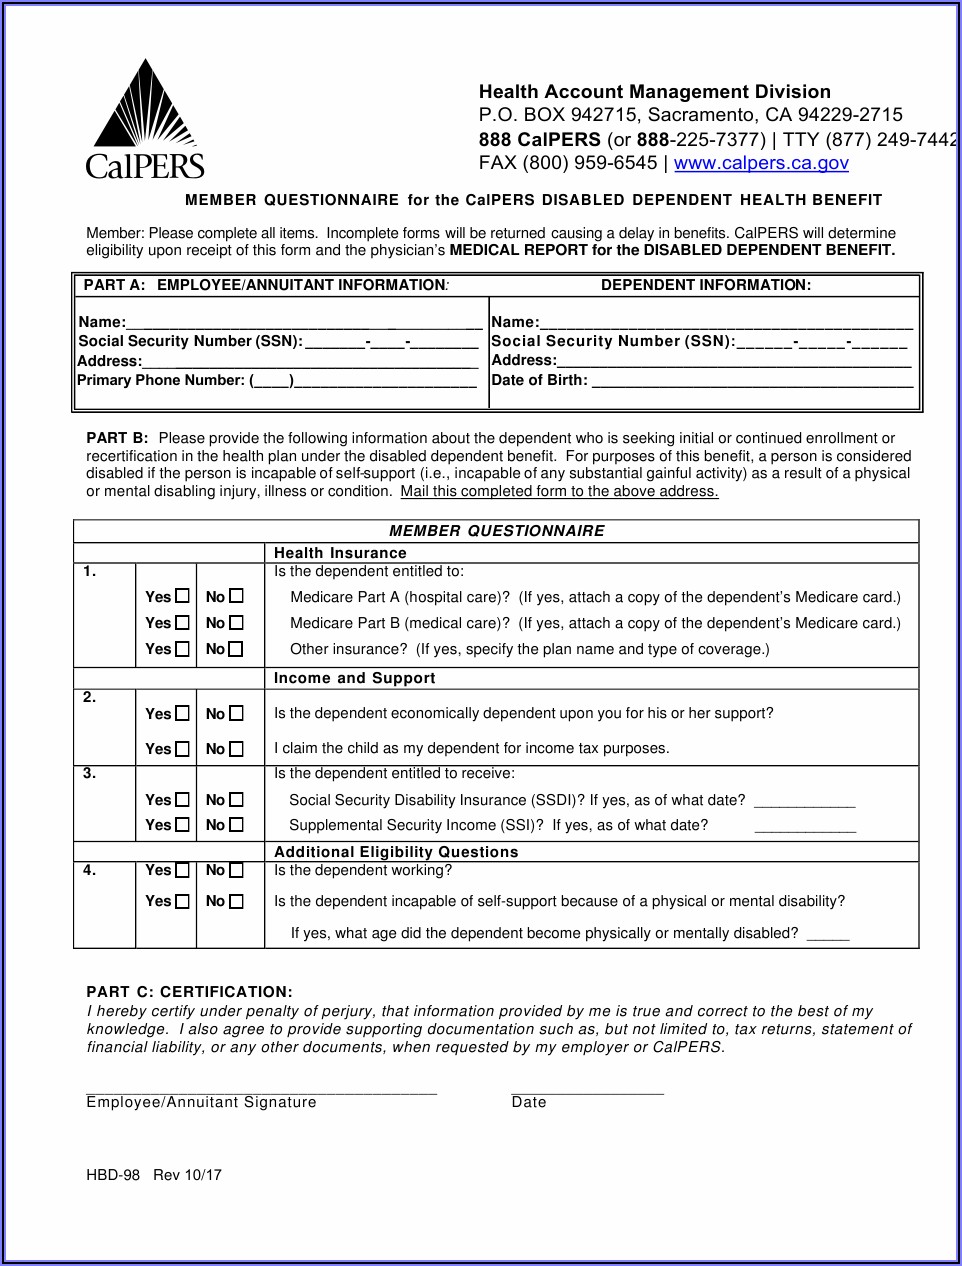 Medicare Initial Enrollment Questionnaire Form